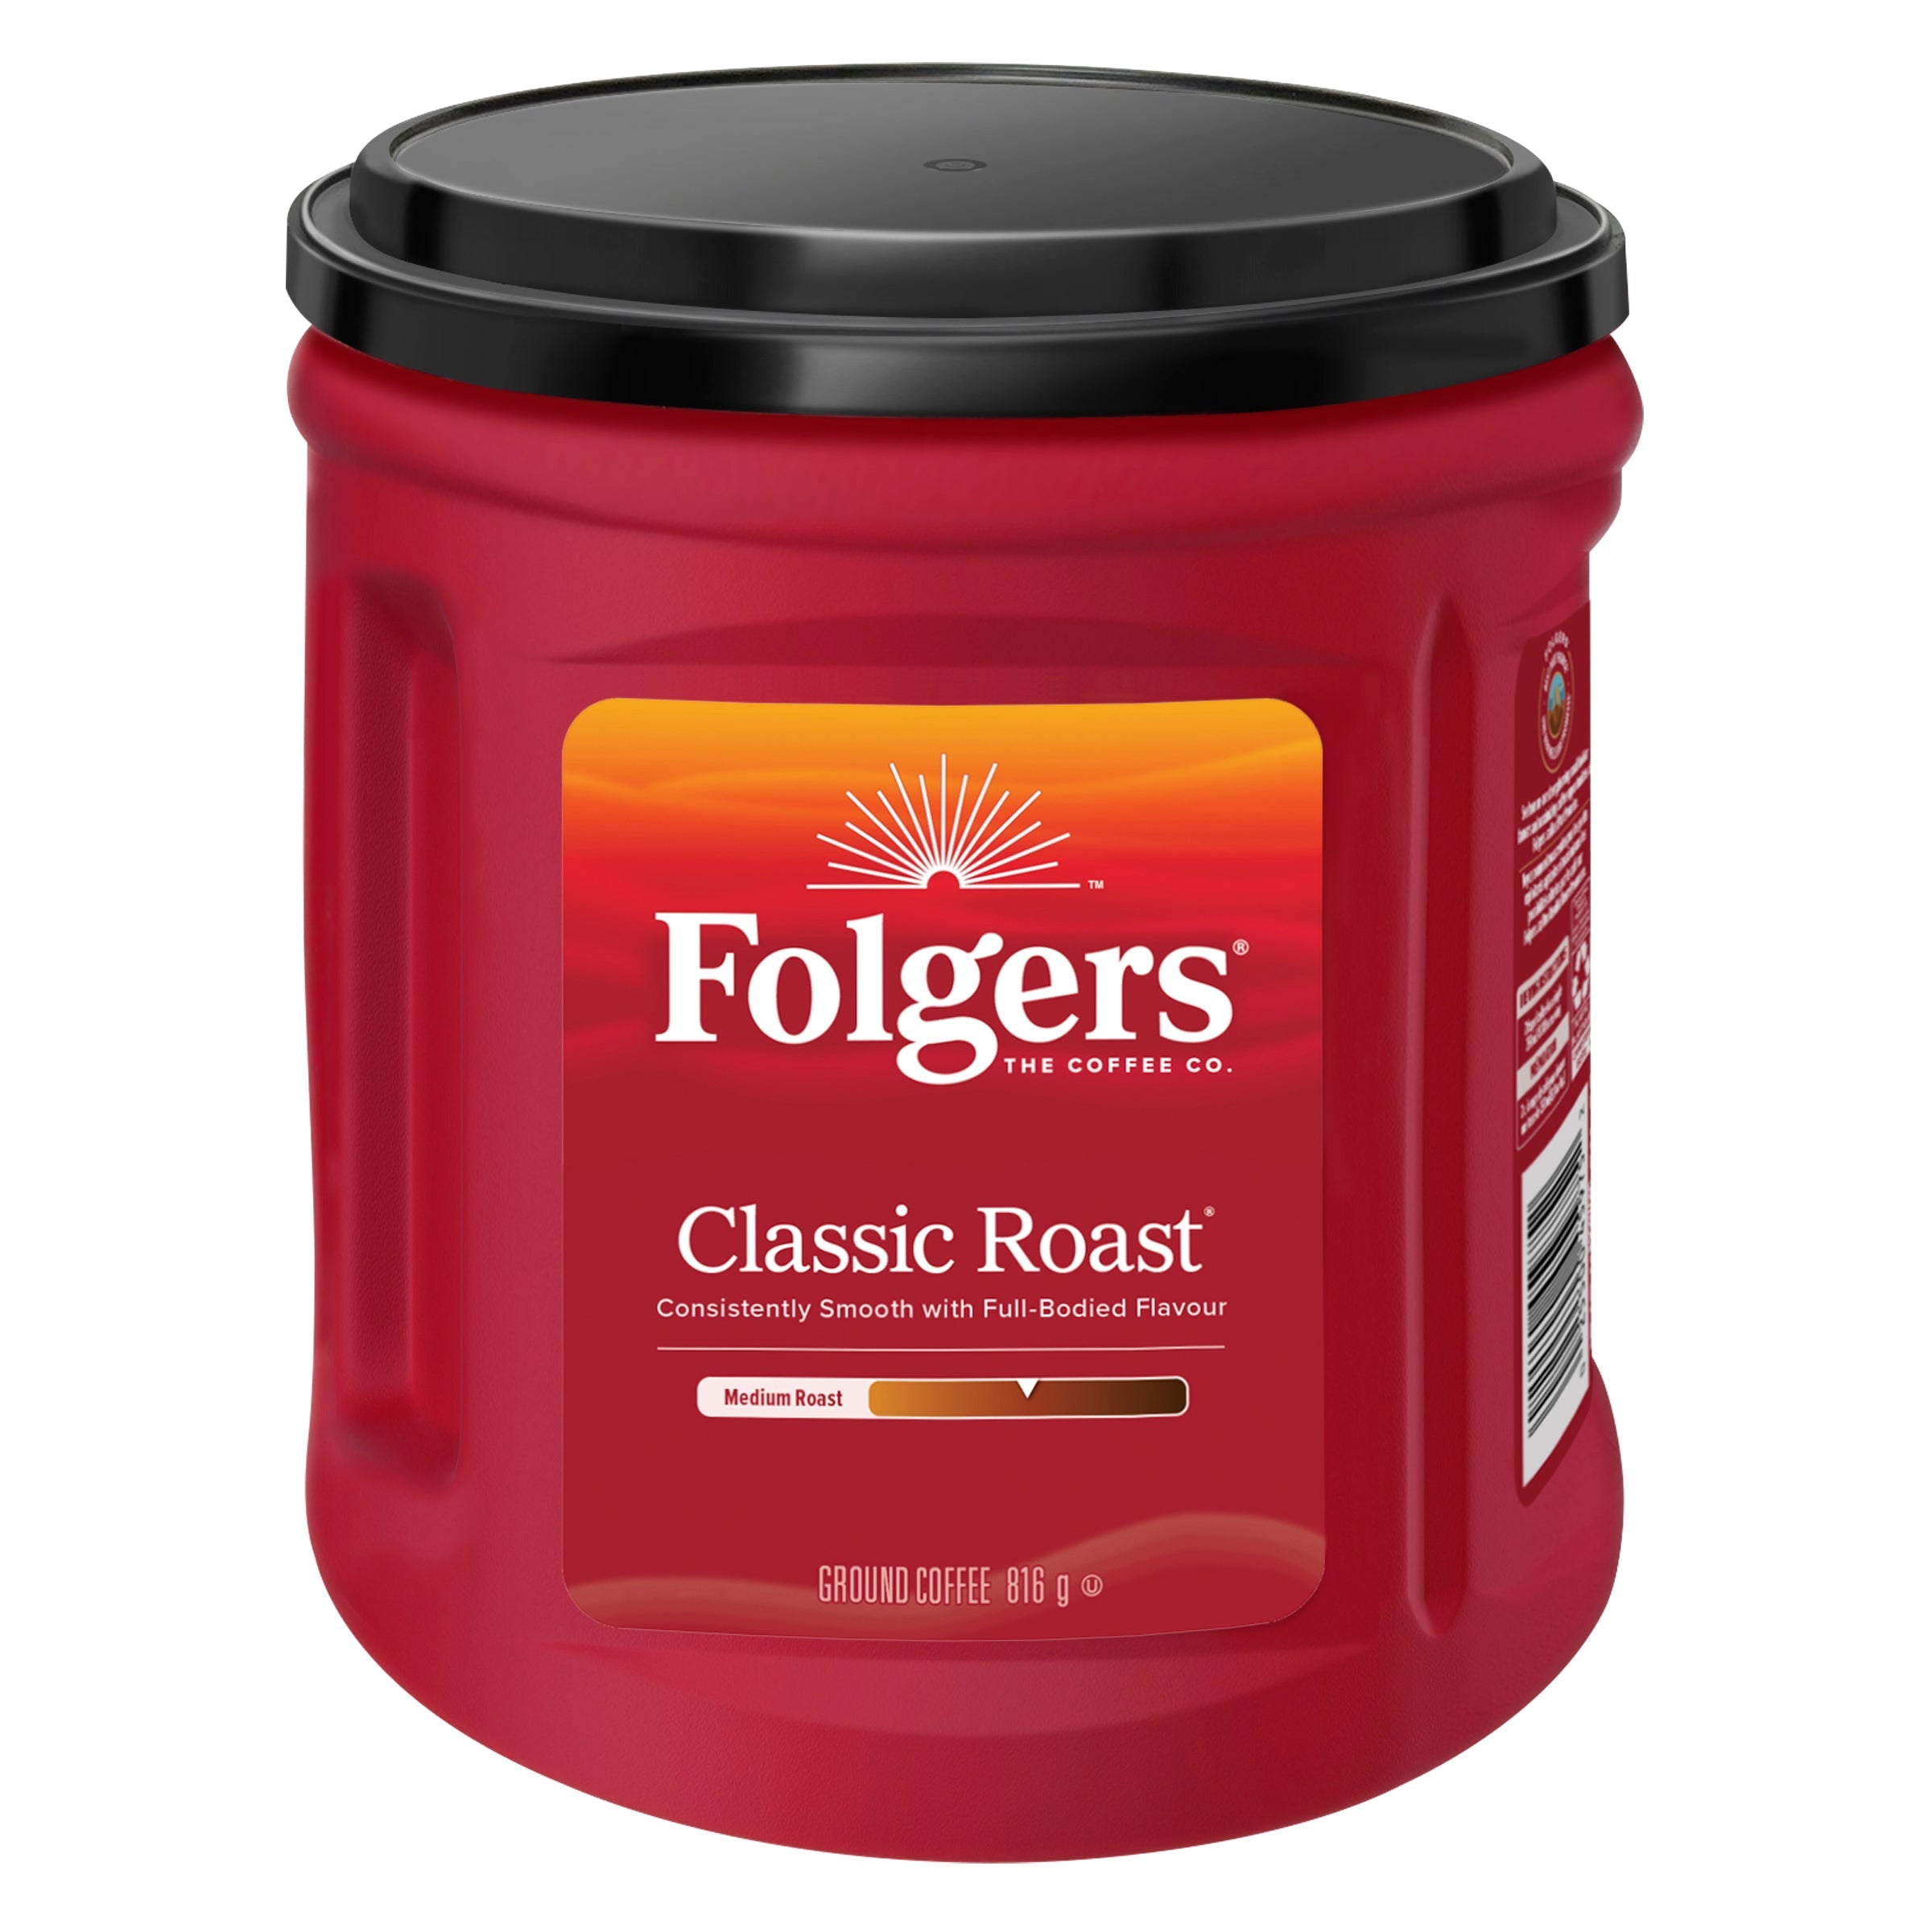 Folgers Classic Medium Roast Coffee (816g)